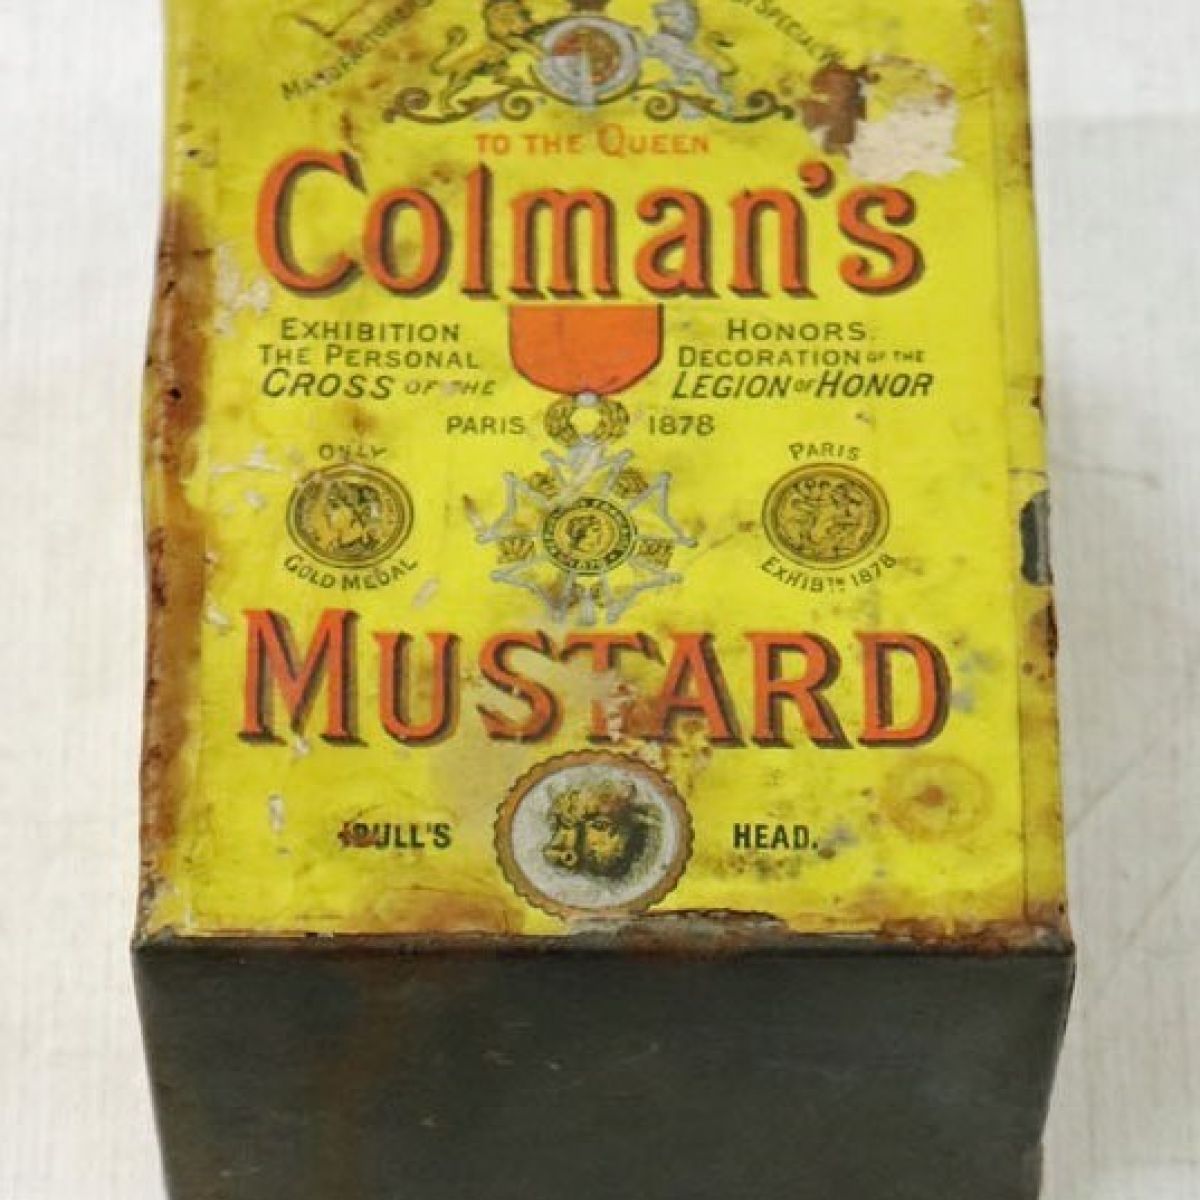 A Colman's mustard tin after receiving treatment